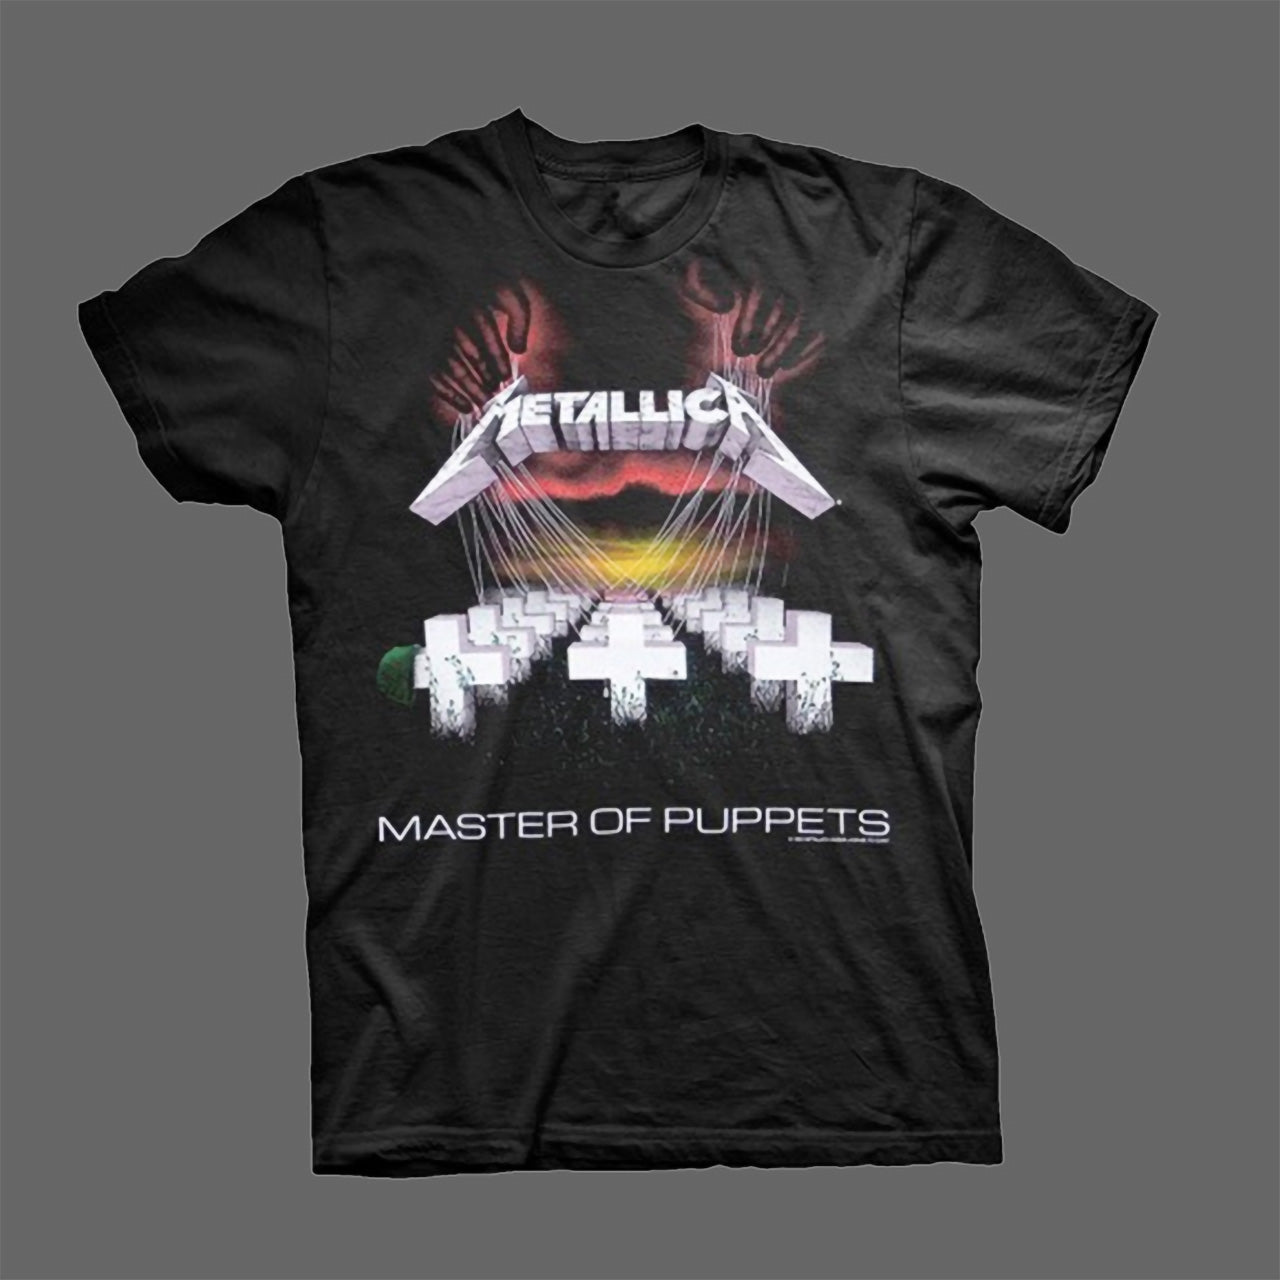 Metallica - Master of Puppets (Tracks) (T-Shirt)